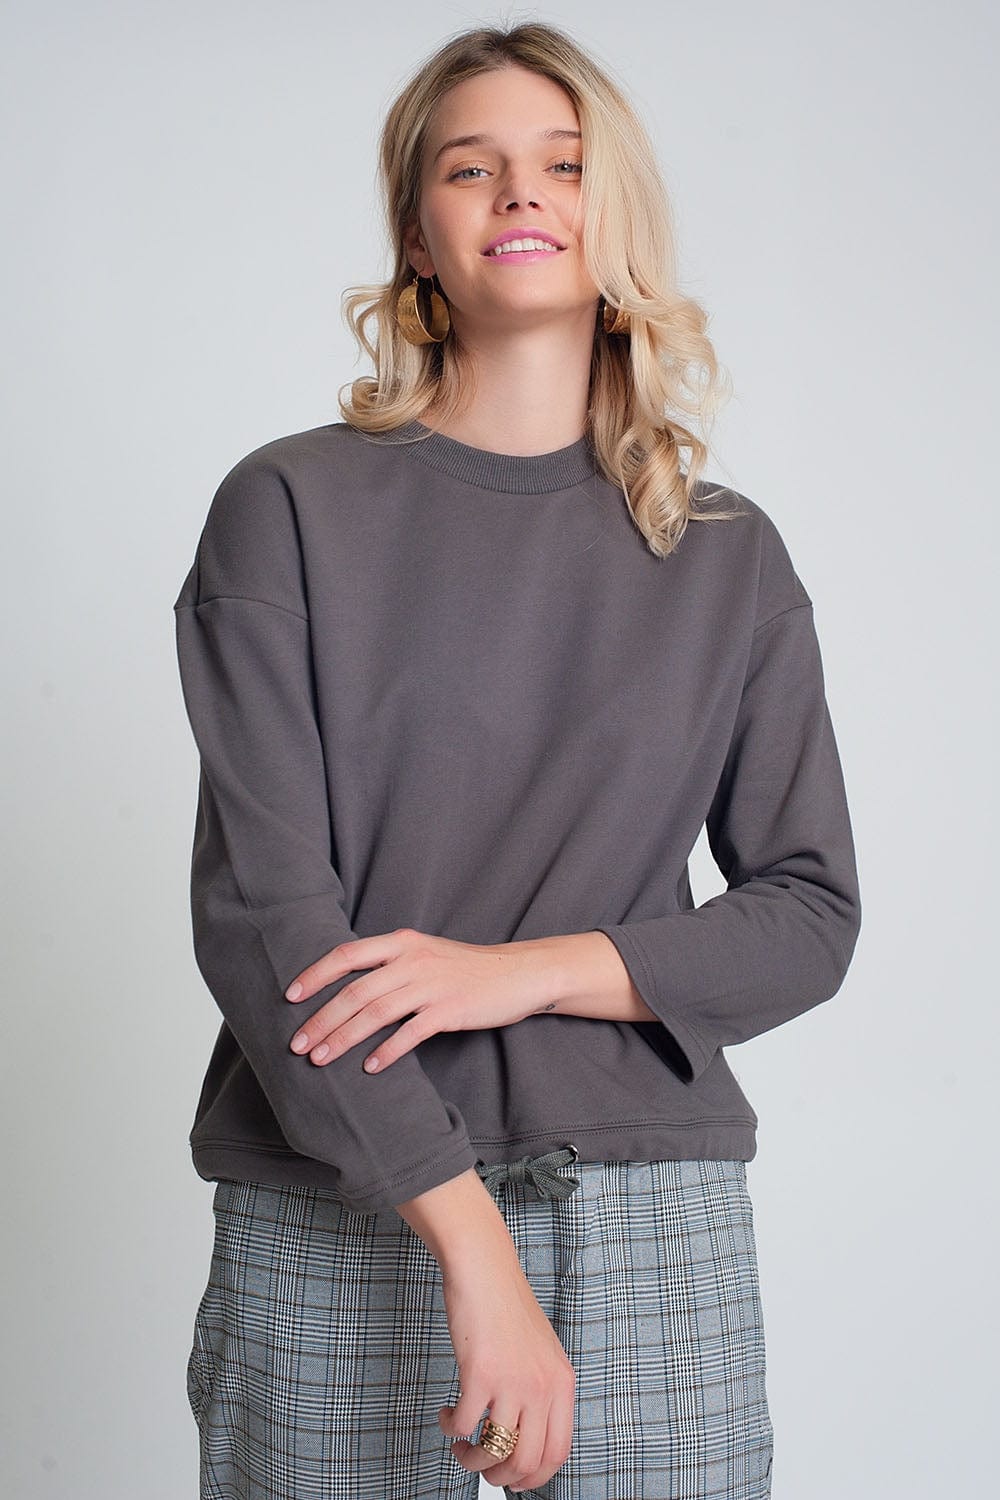 Q2 Women's Sweatshirt Cotton Drawstring Sweatshirt in Gray